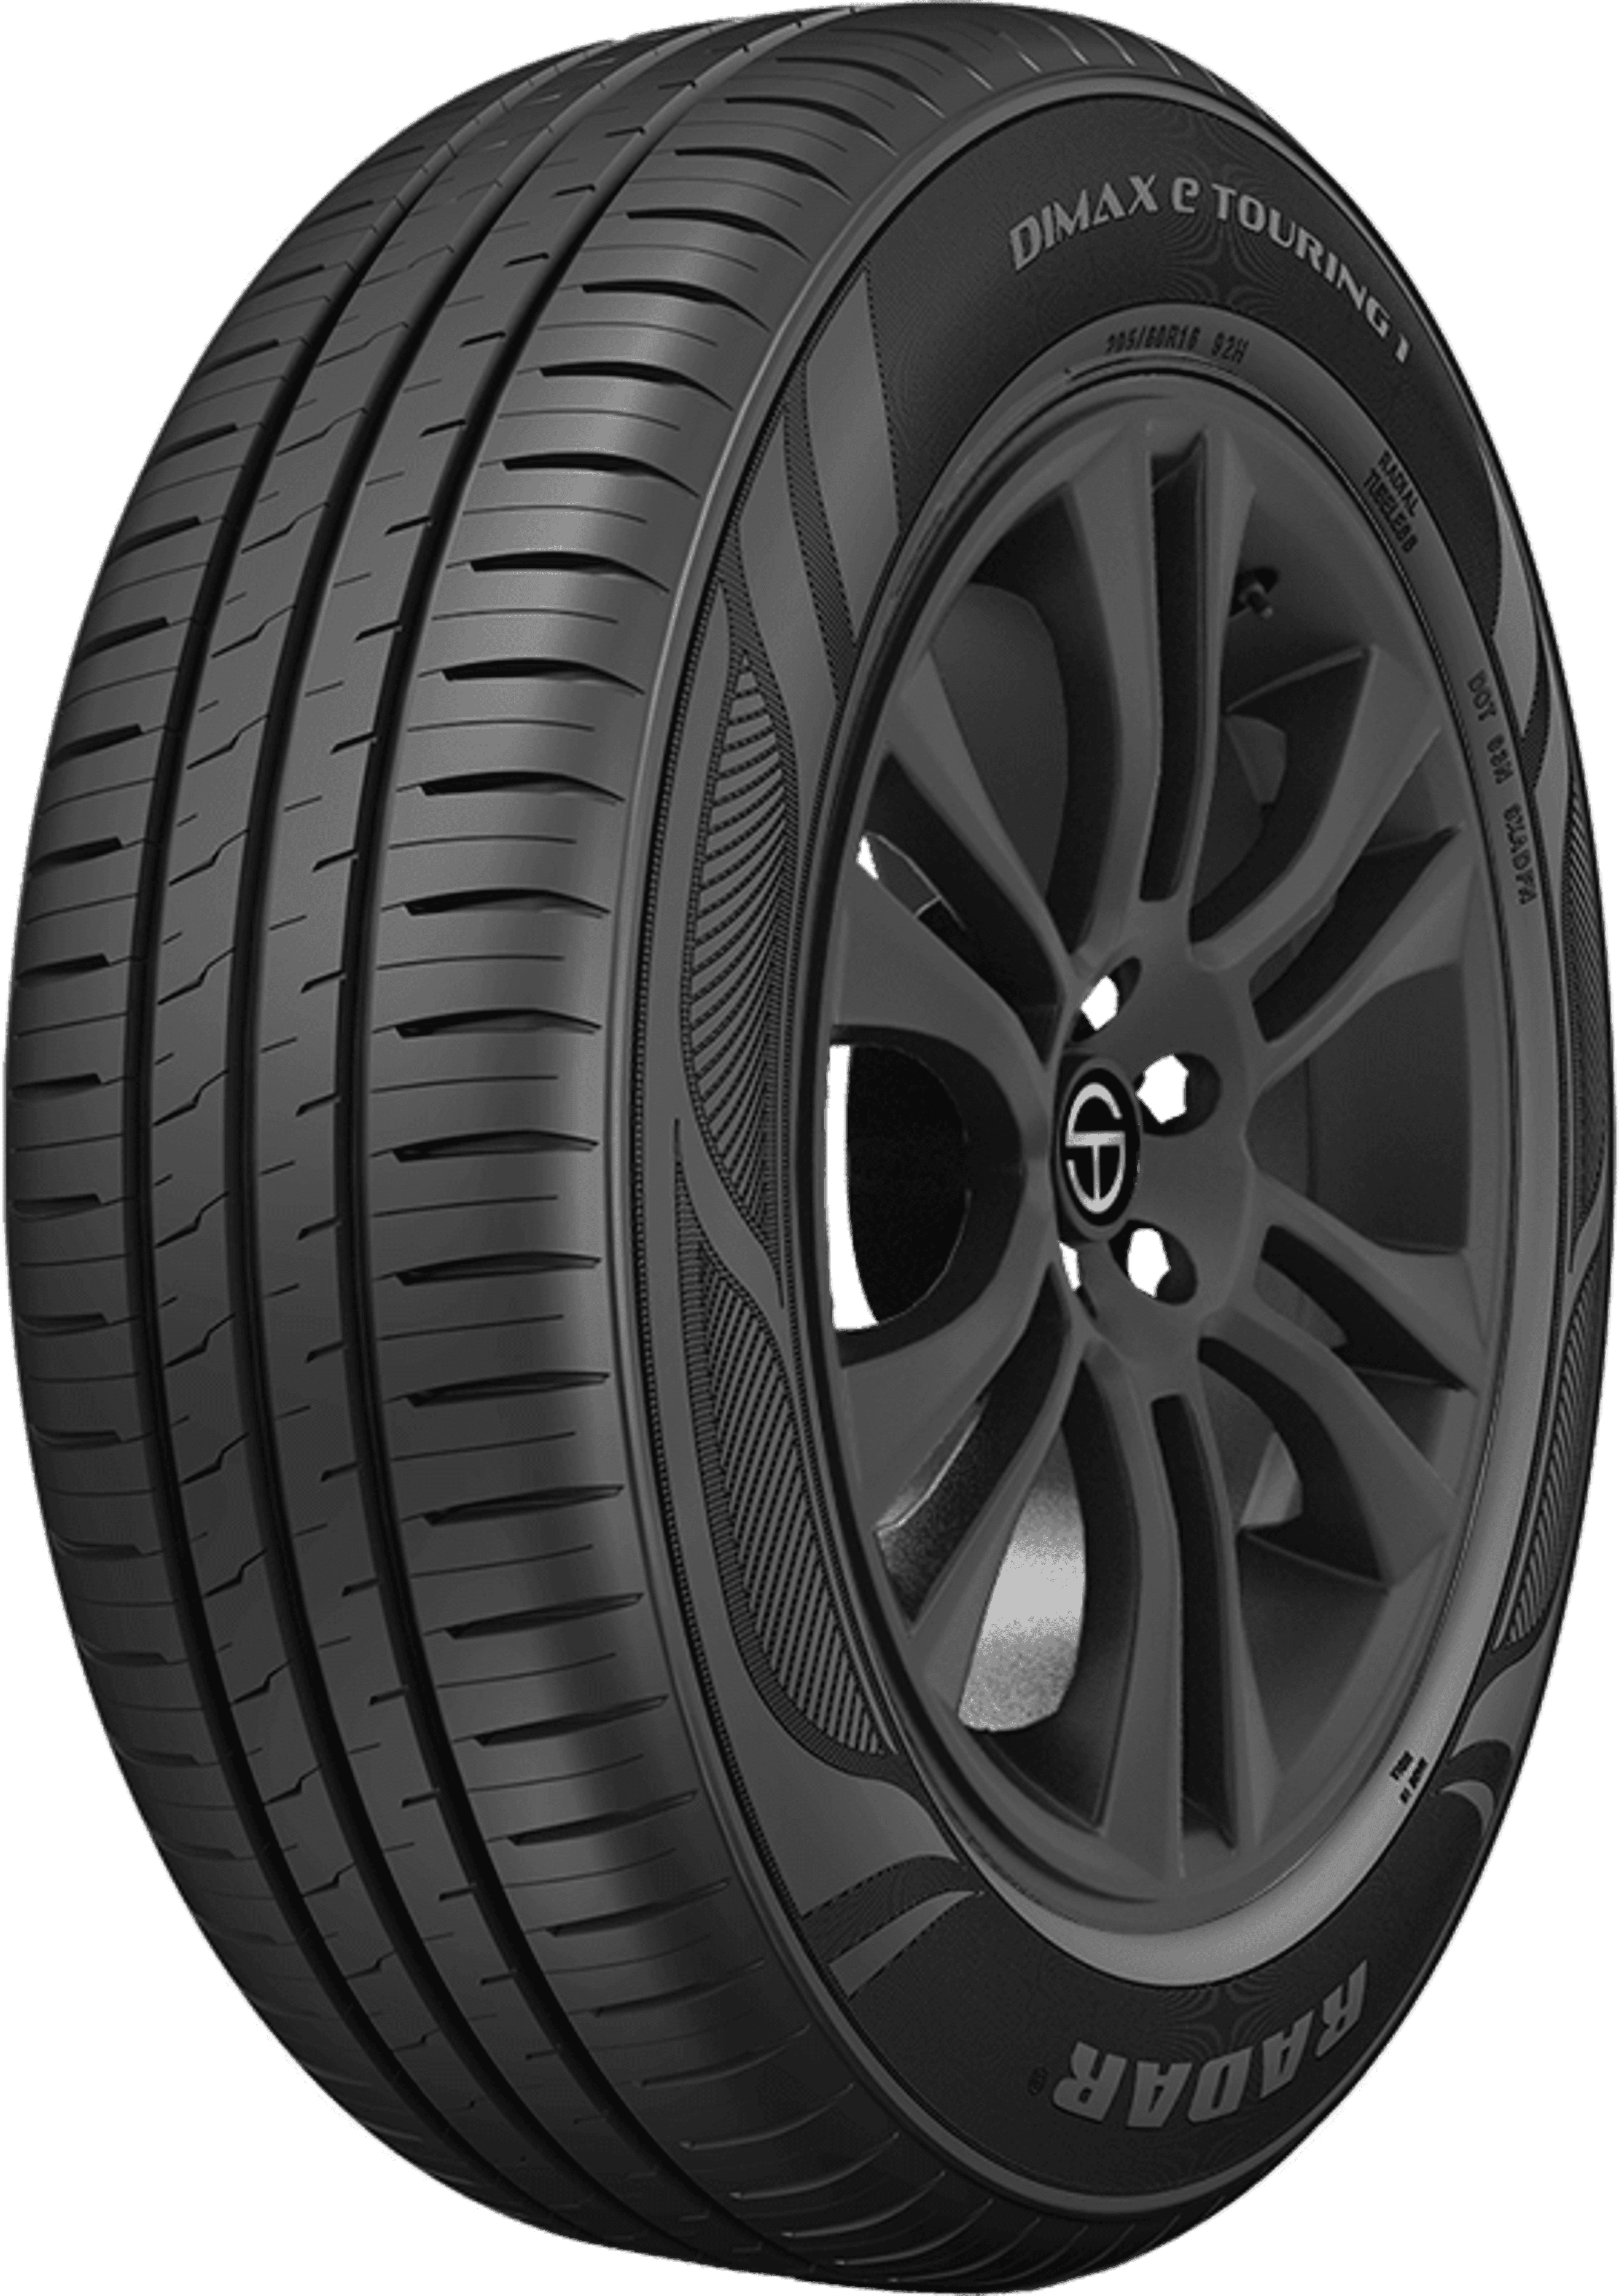 Buy Radar DIMAX e-Touring 1 Tires Online